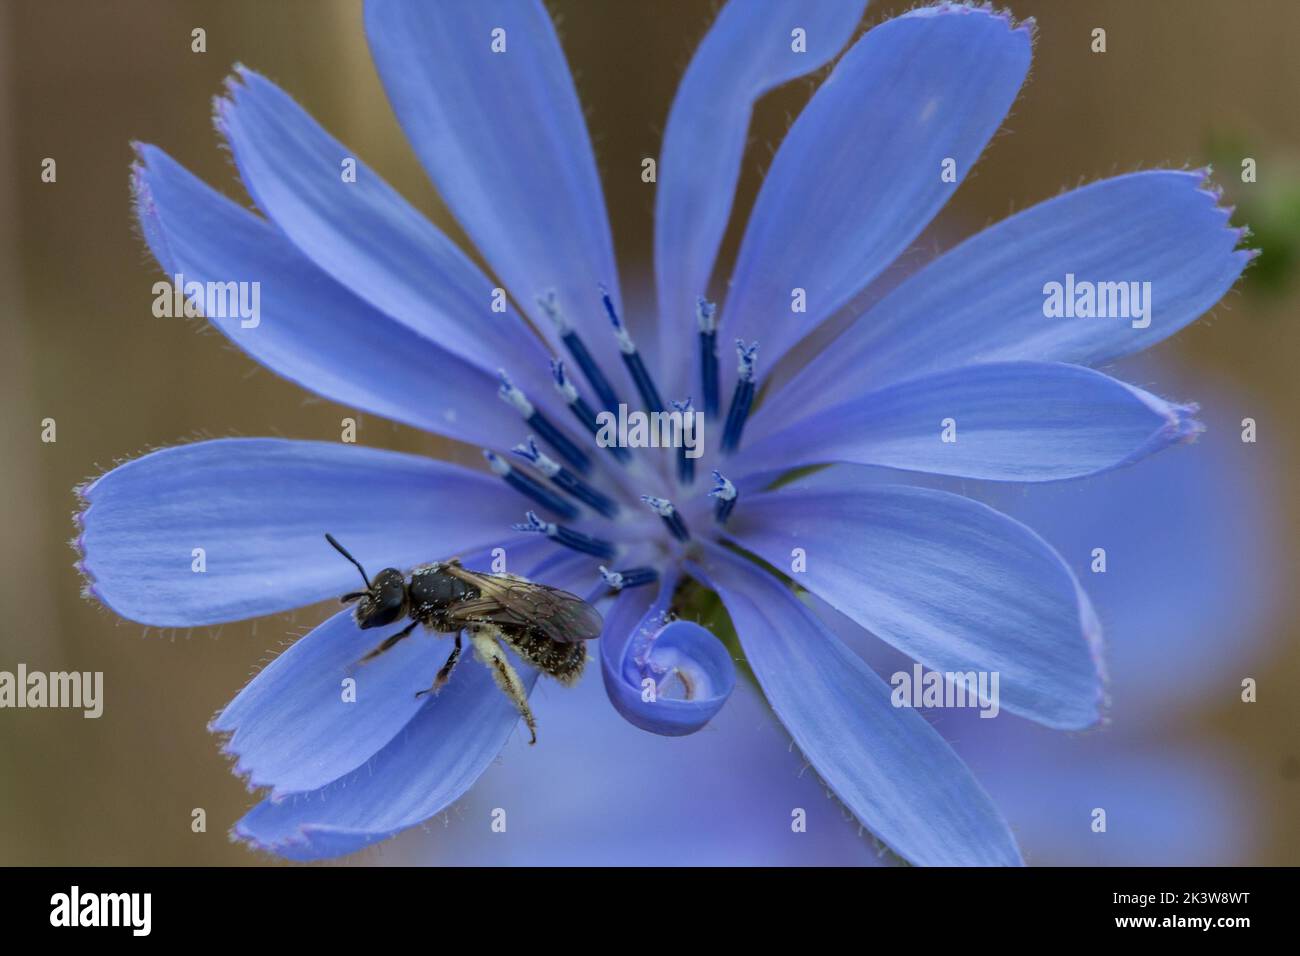 Primer plano de una abeja sobre una flor de achicoria común azul Foto de stock